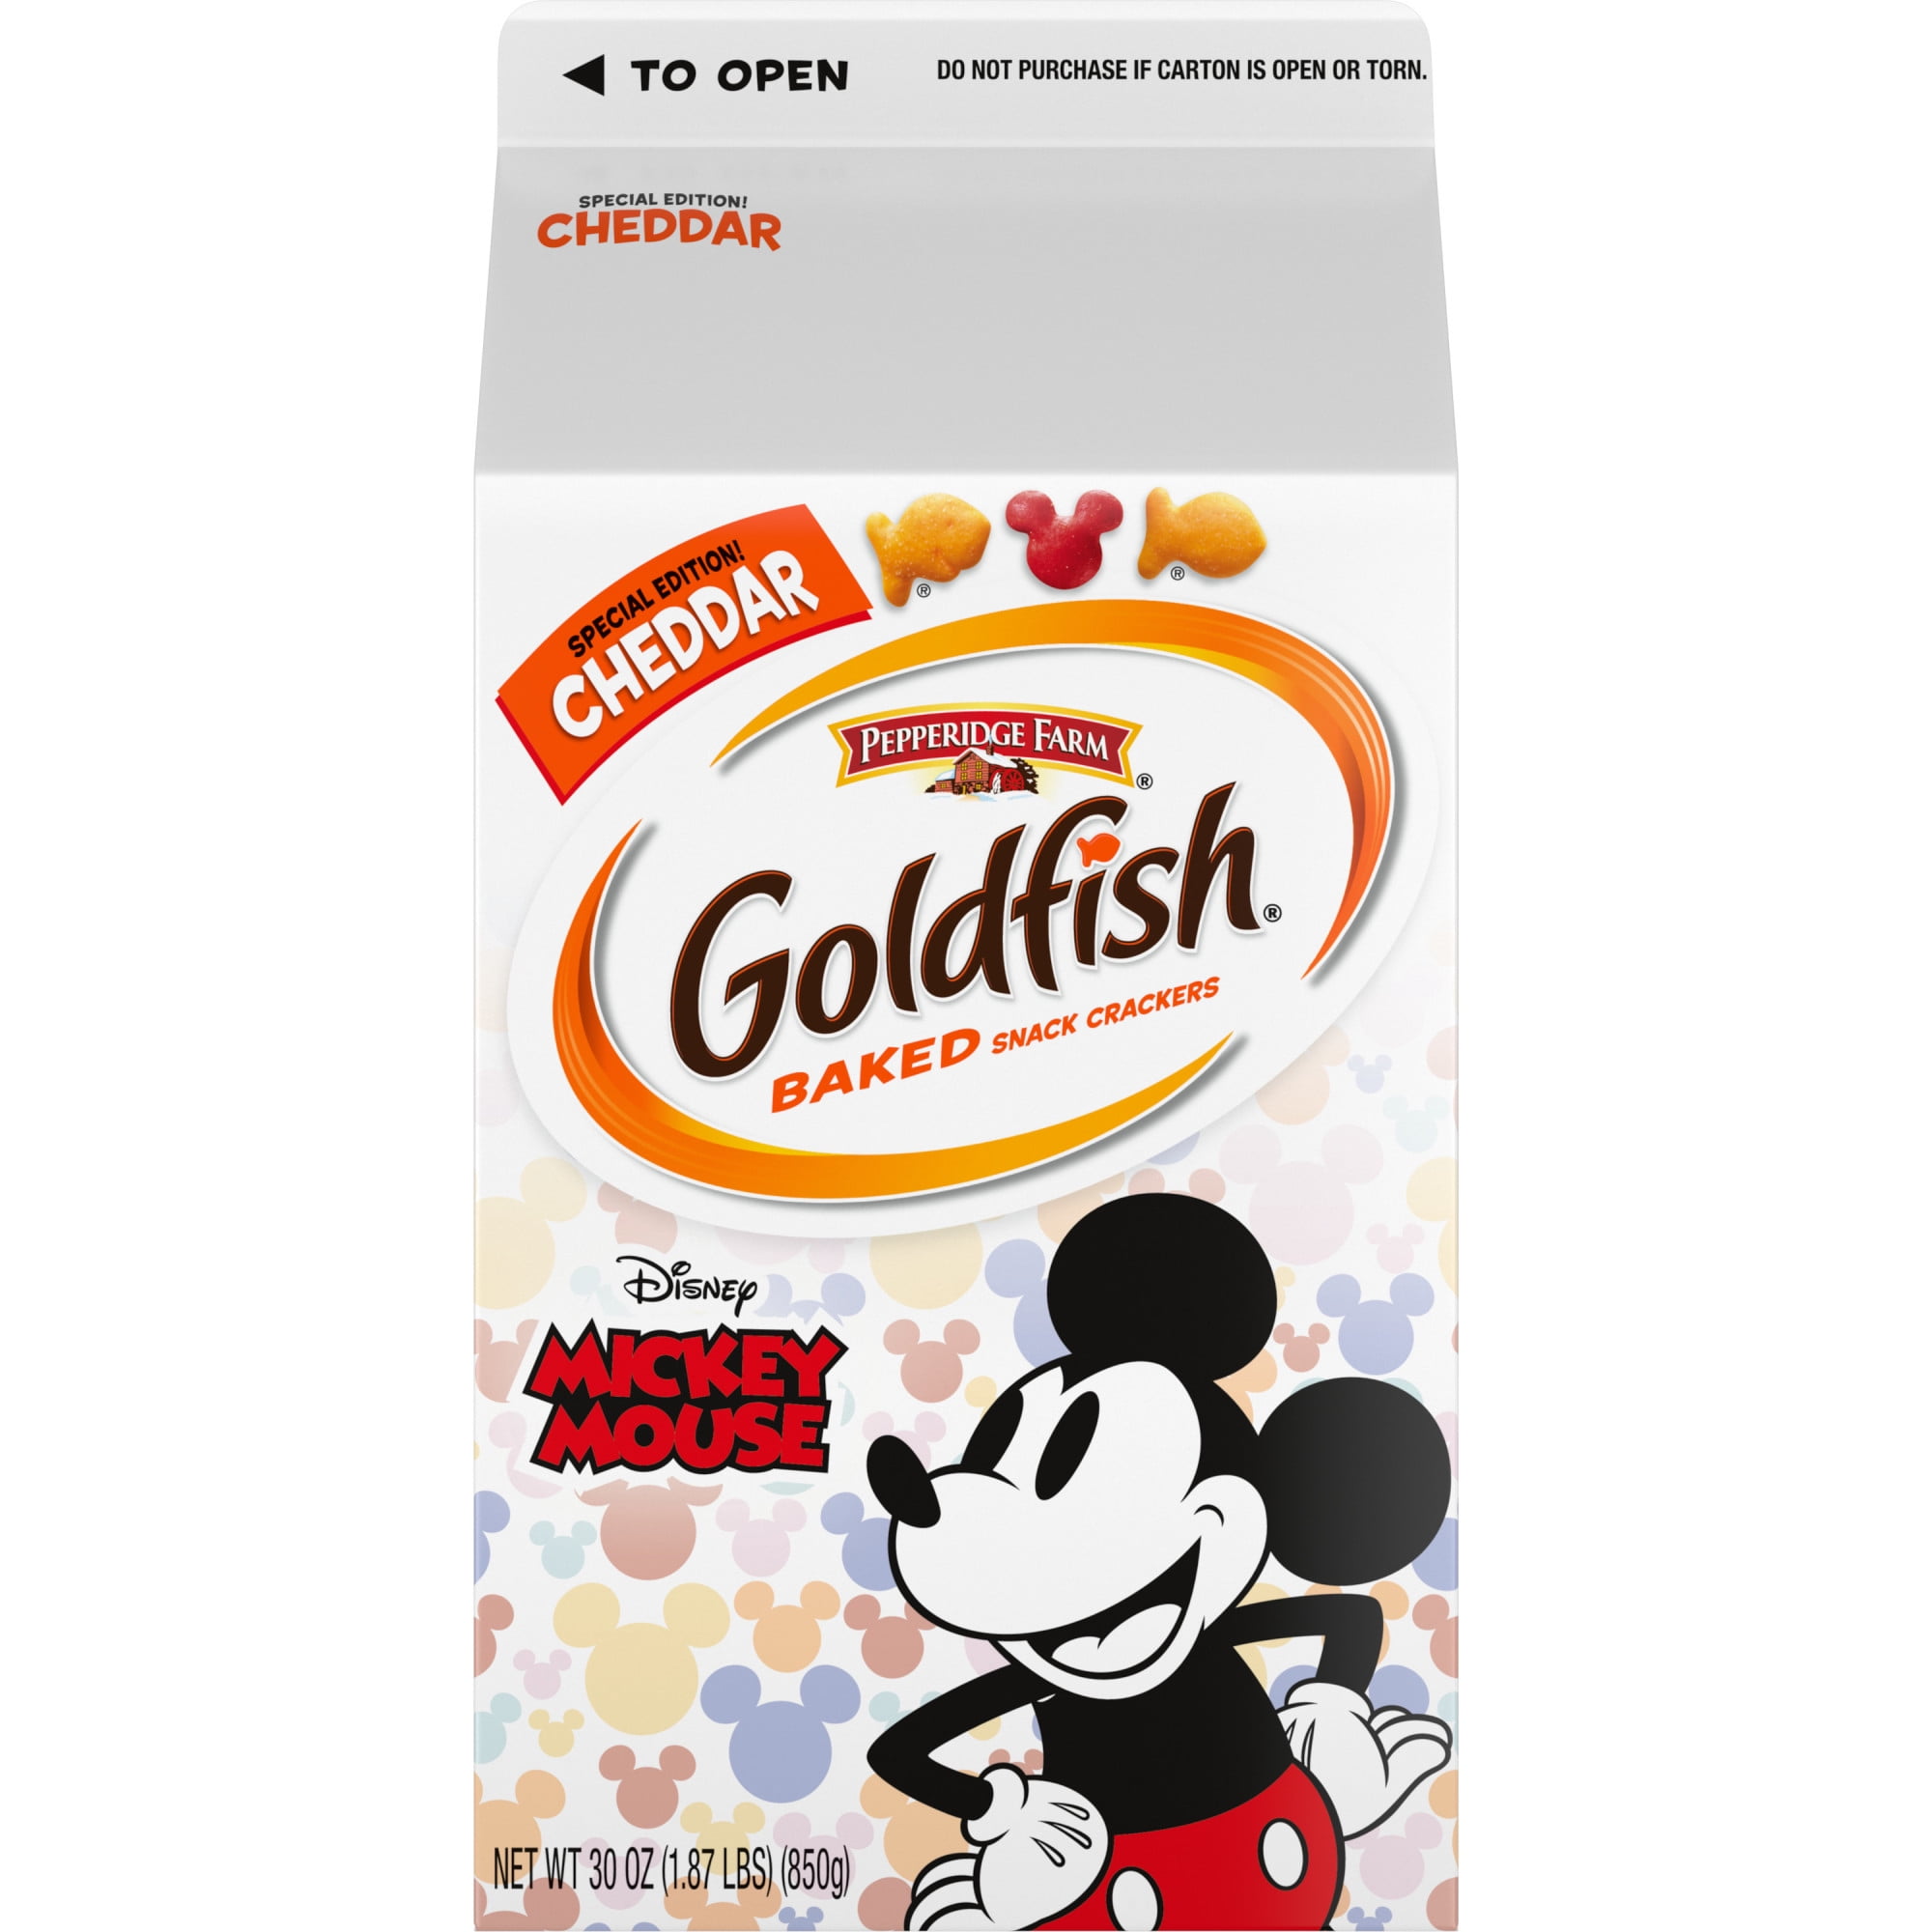 Goldfish Disney Mickey Mouse Cheddar Crackers, Snack Crackers, 30 oz carton